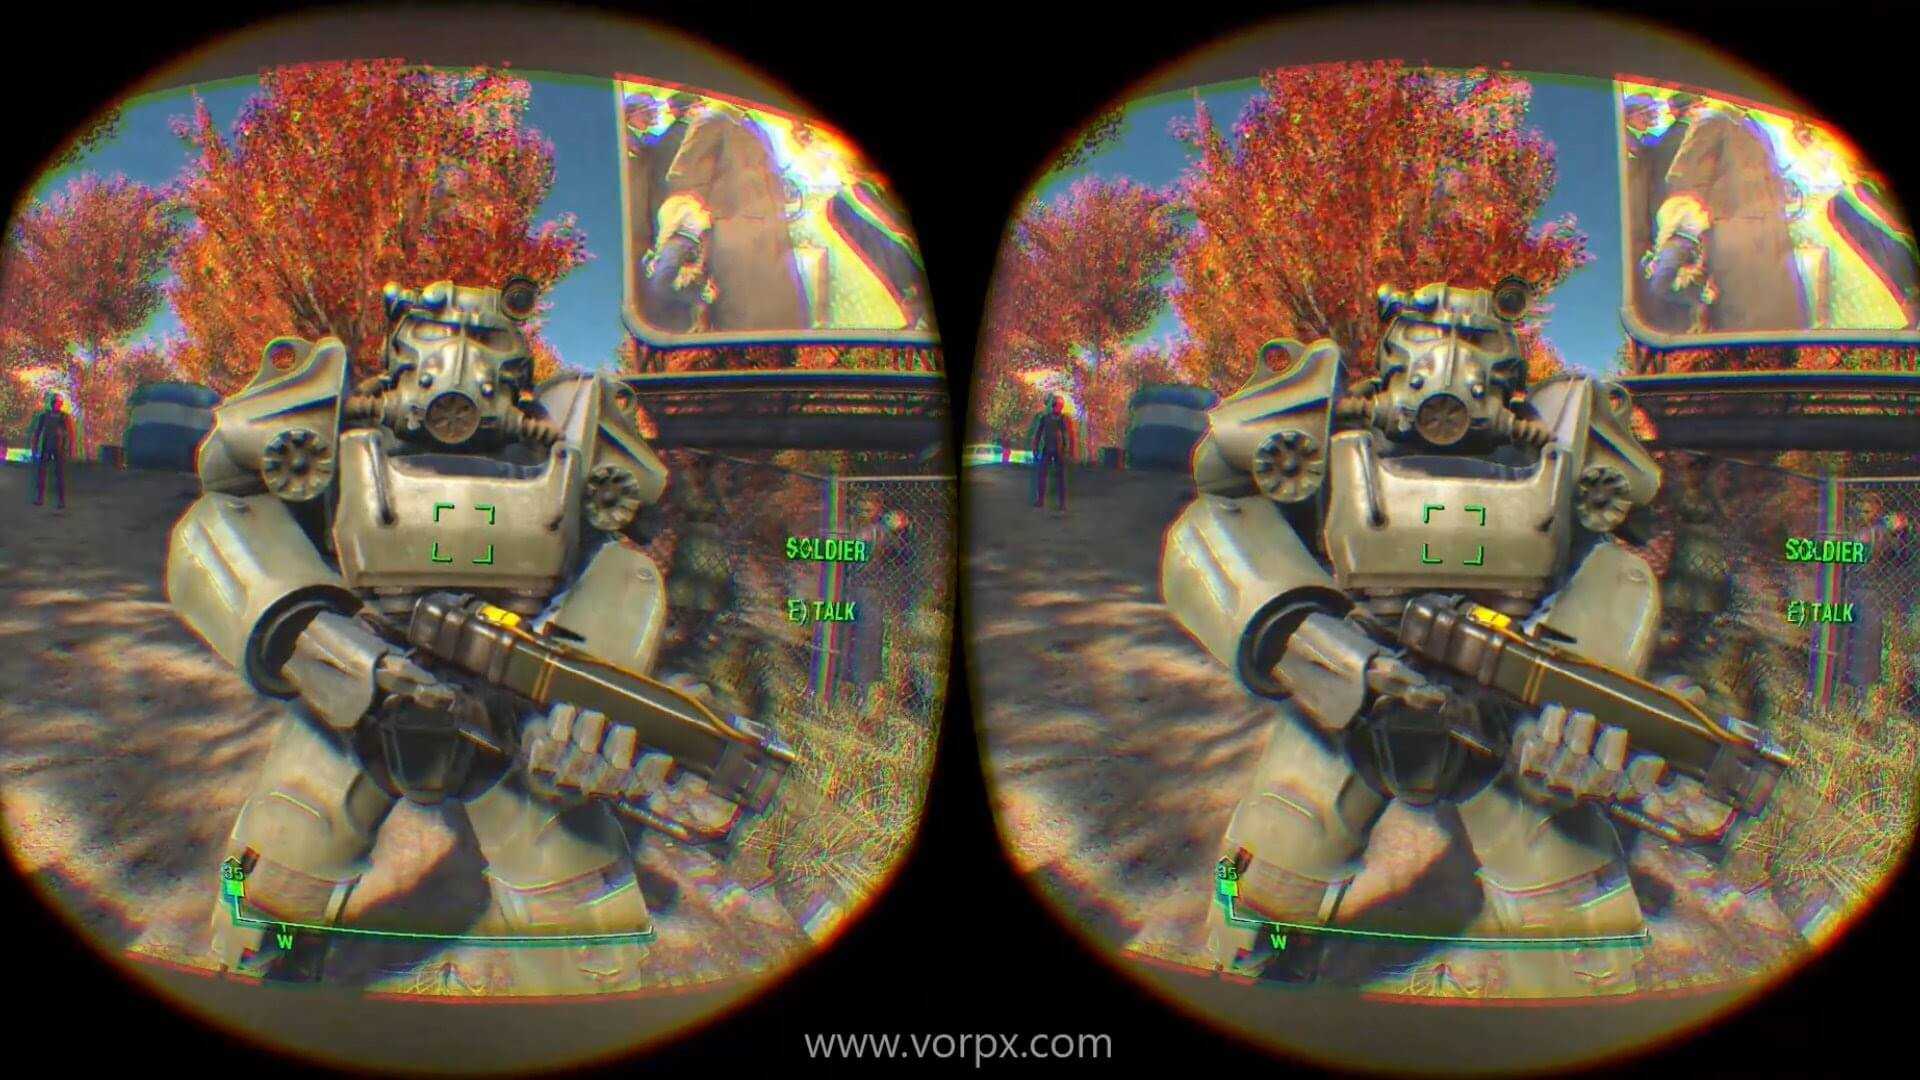 4 – In Oculus Reality (VorpX profile) – VR Bites